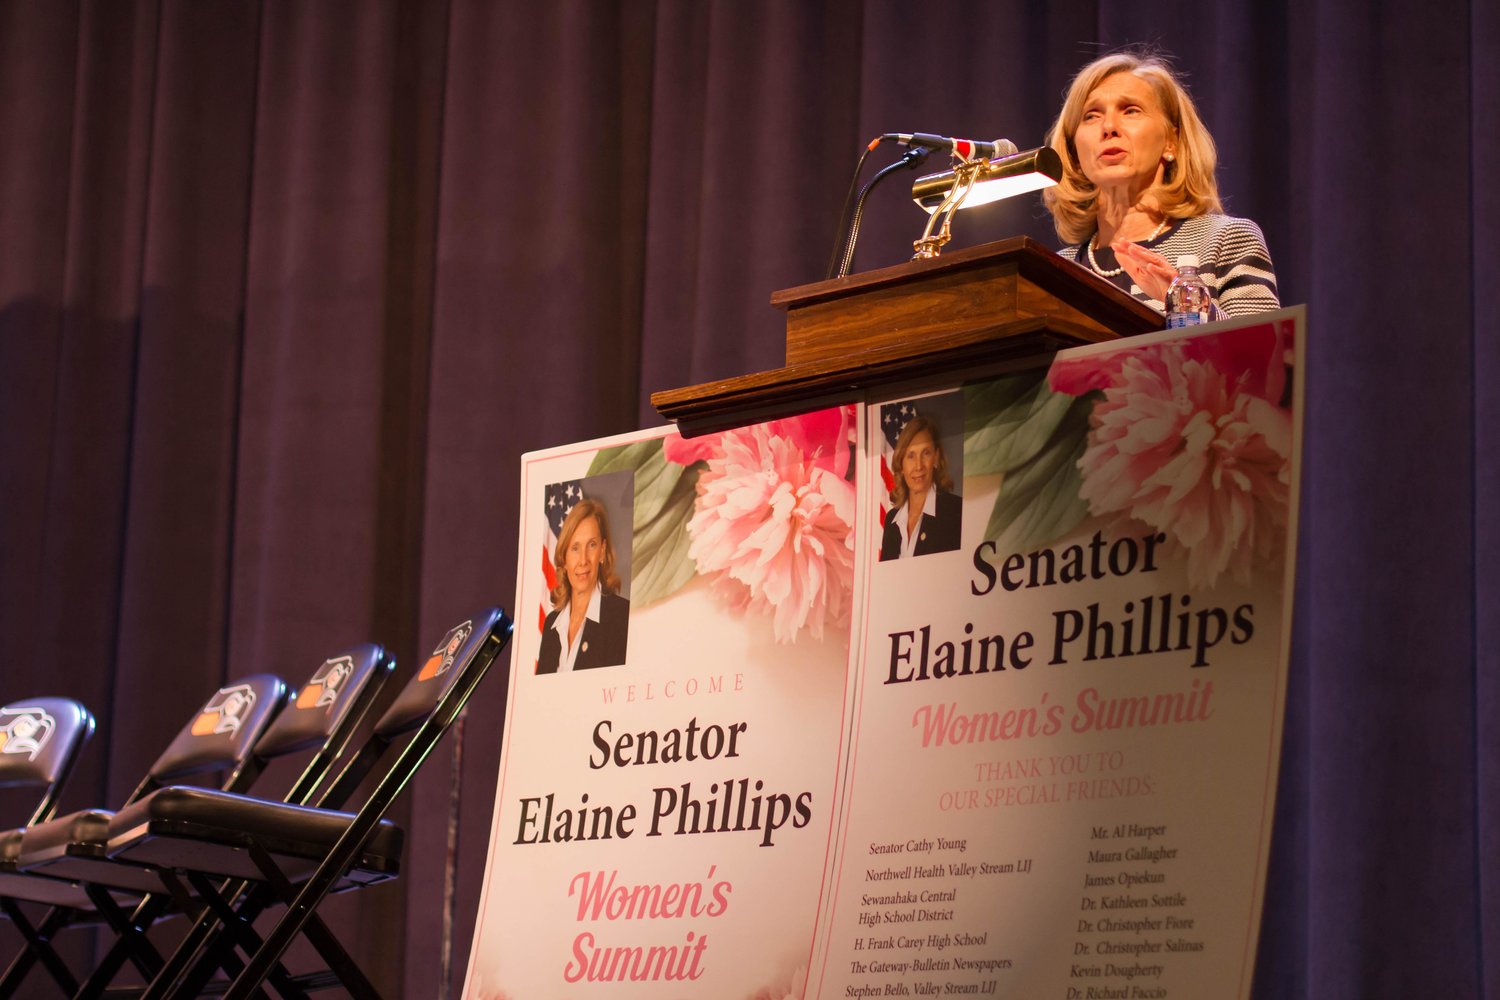 Senator Elaine Phillips